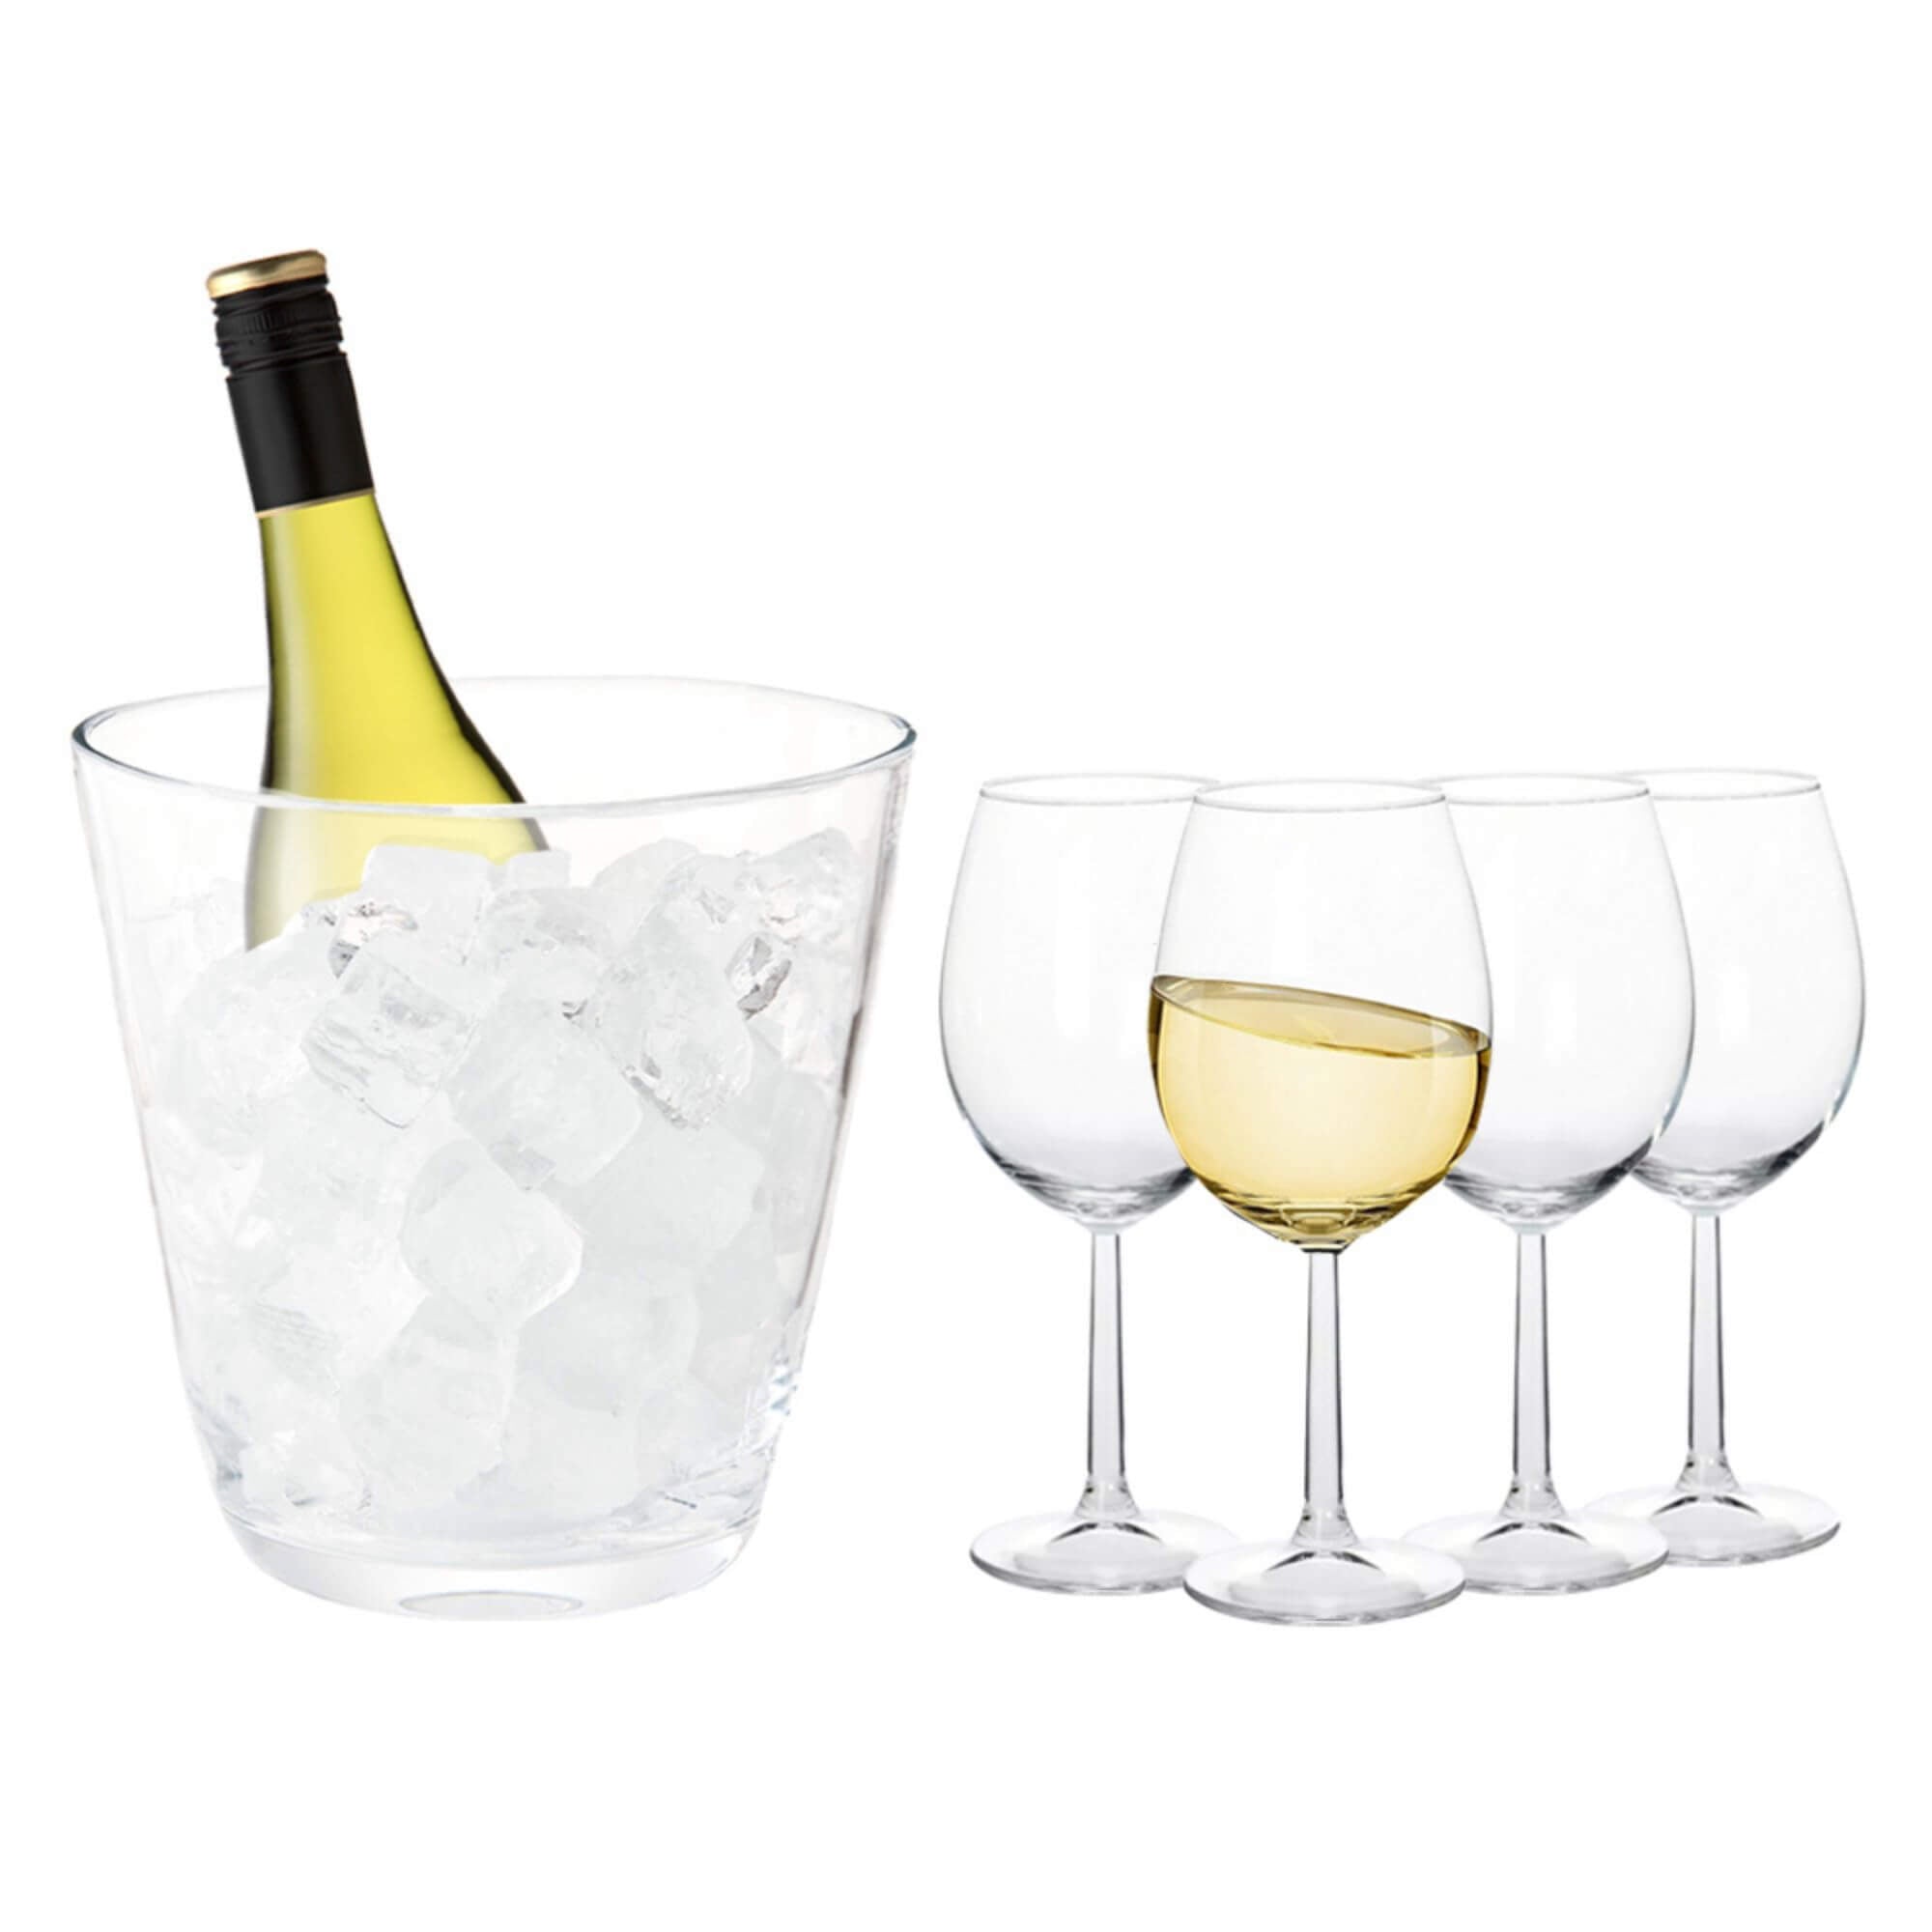 4 Wine Glasses 430ml & 1.5 Litre Glass Ice Bucket - White Wine Gift Set